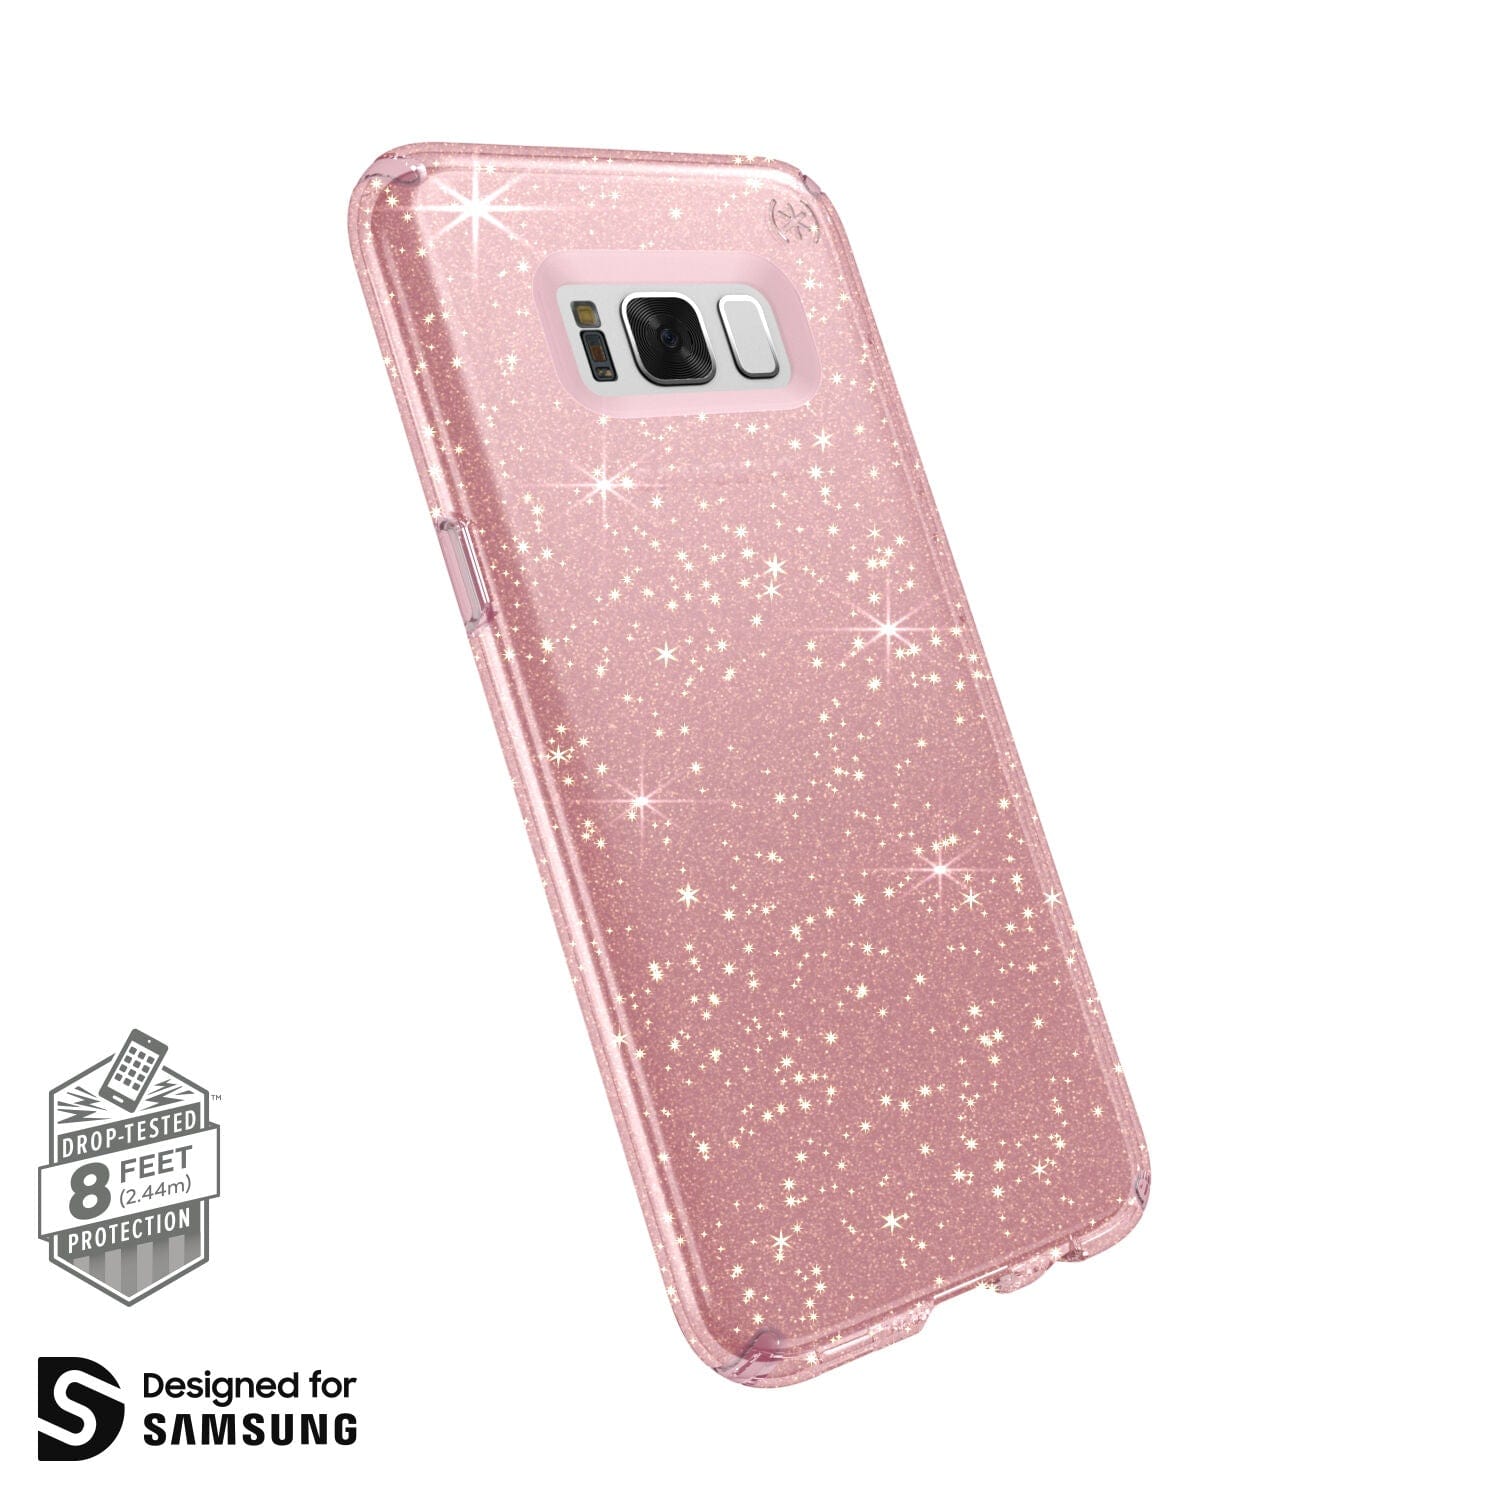 Krav termometer Næb Speck Presidio Clear + Glitter Samsung Galaxy S8 Cases Best Galaxy S8 -  $44.95